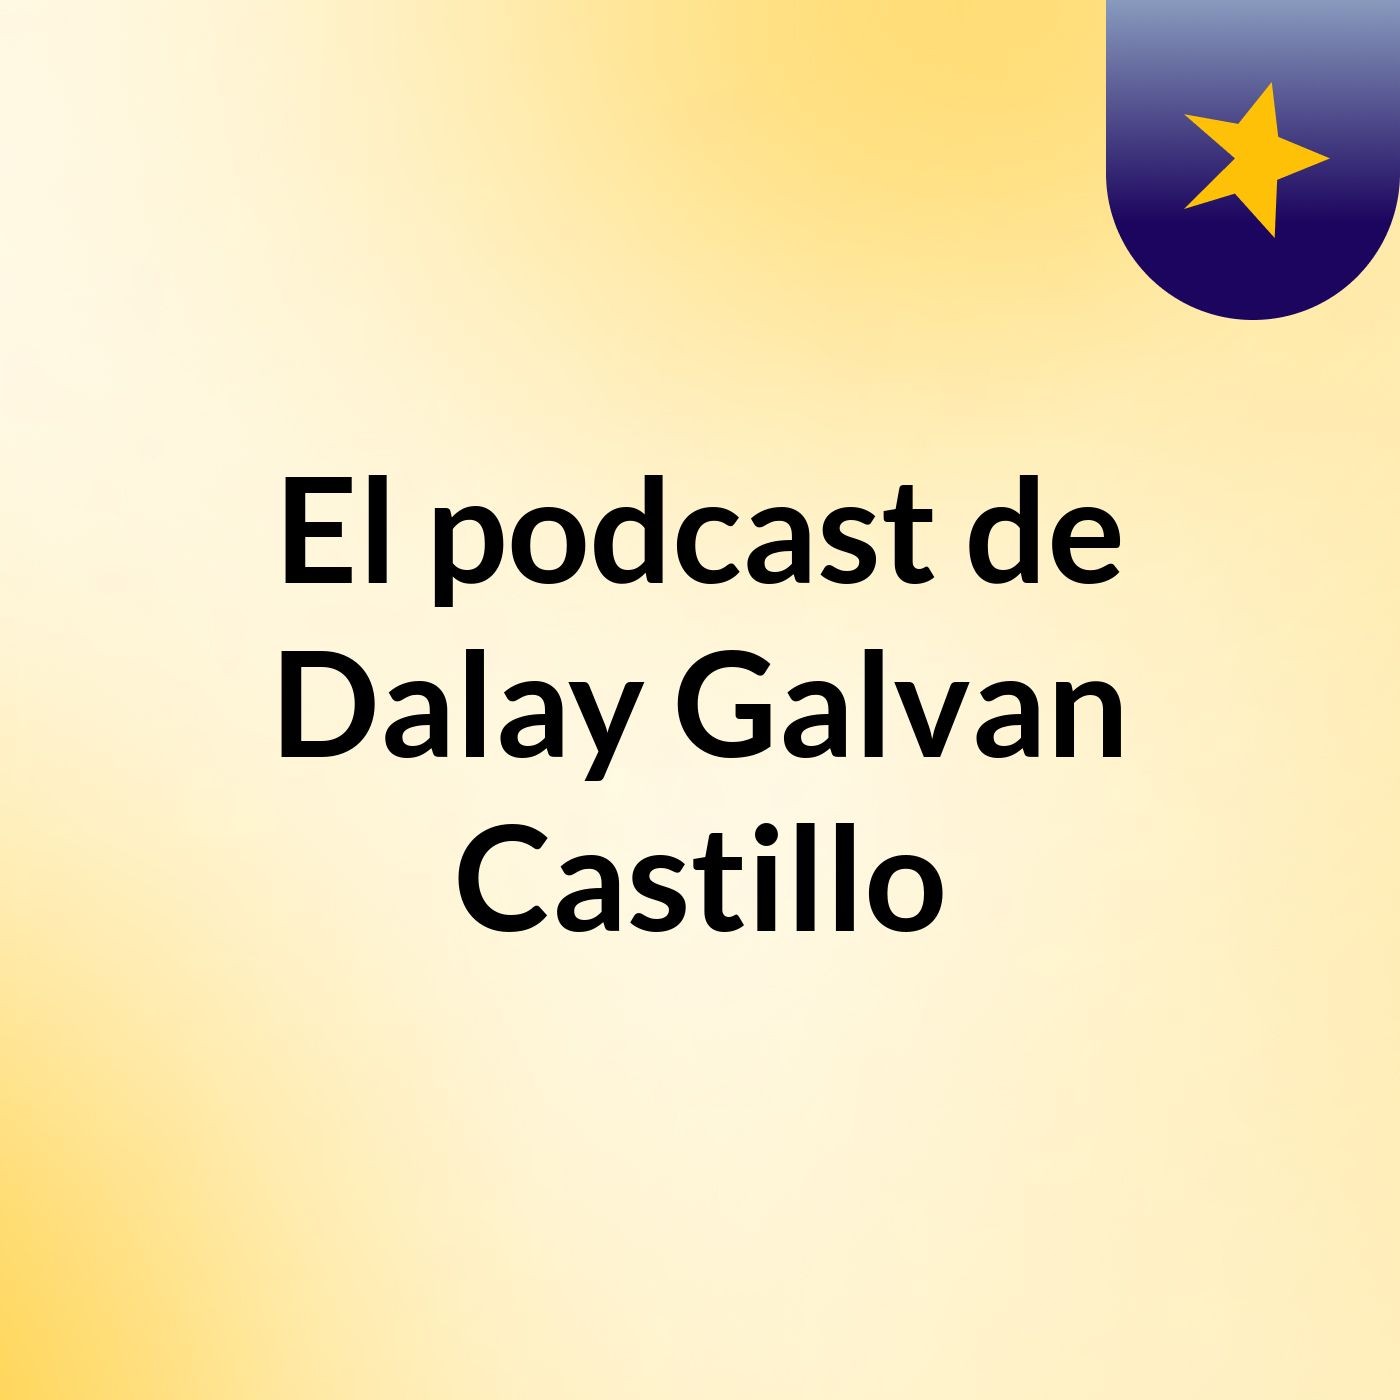 El podcast de Dalay Galvan Castillo